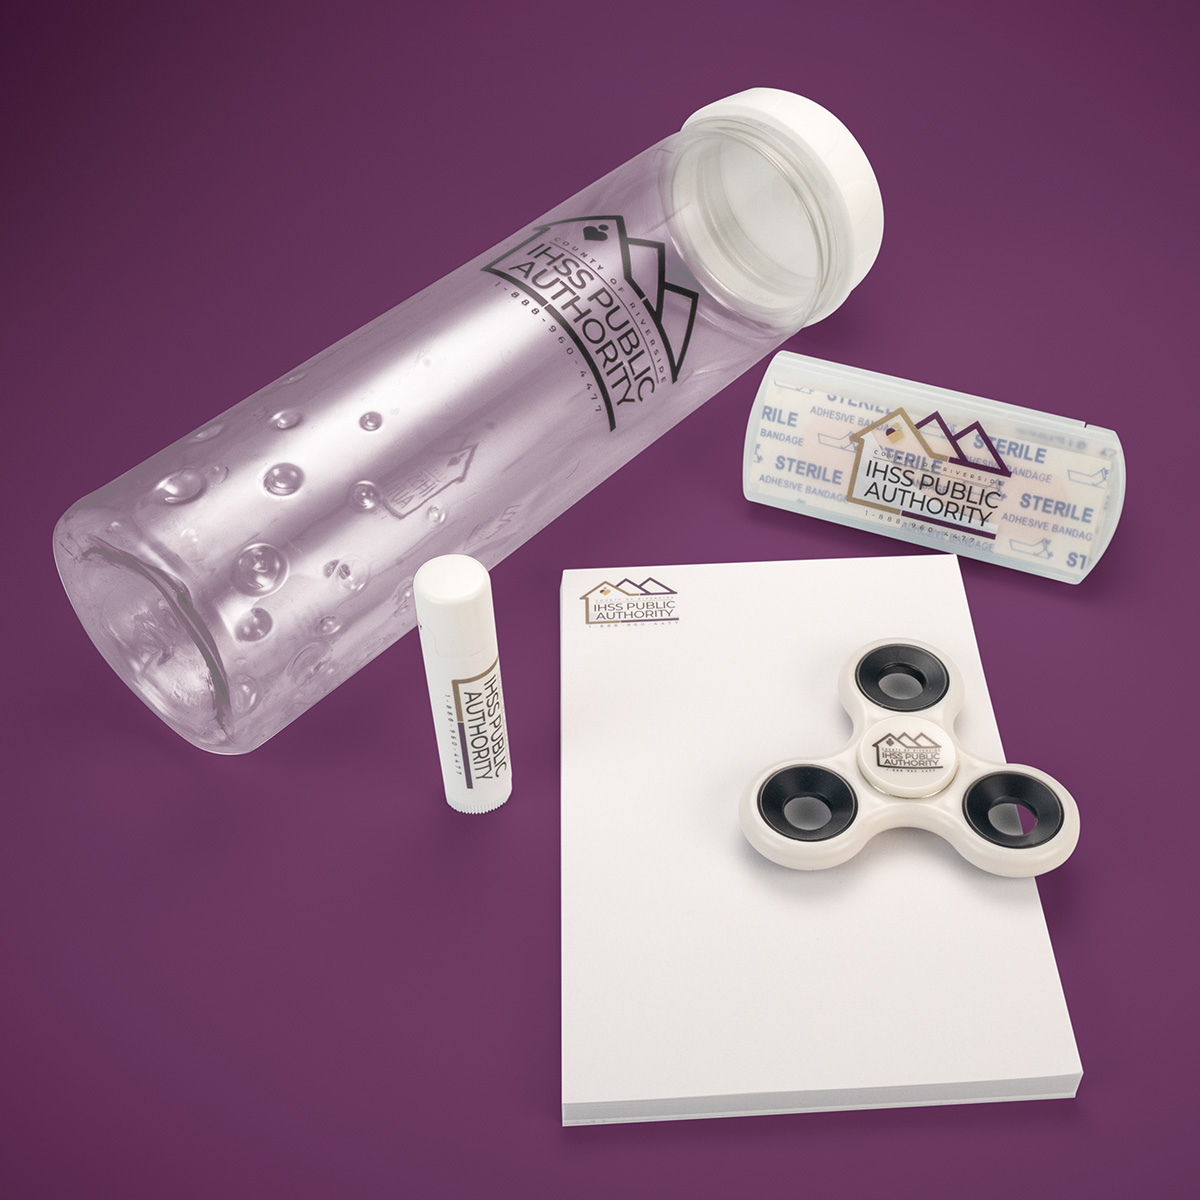 Promo Items: Water Bottle, Notepad, Lip Balm, Bandages & Fidget Spinner